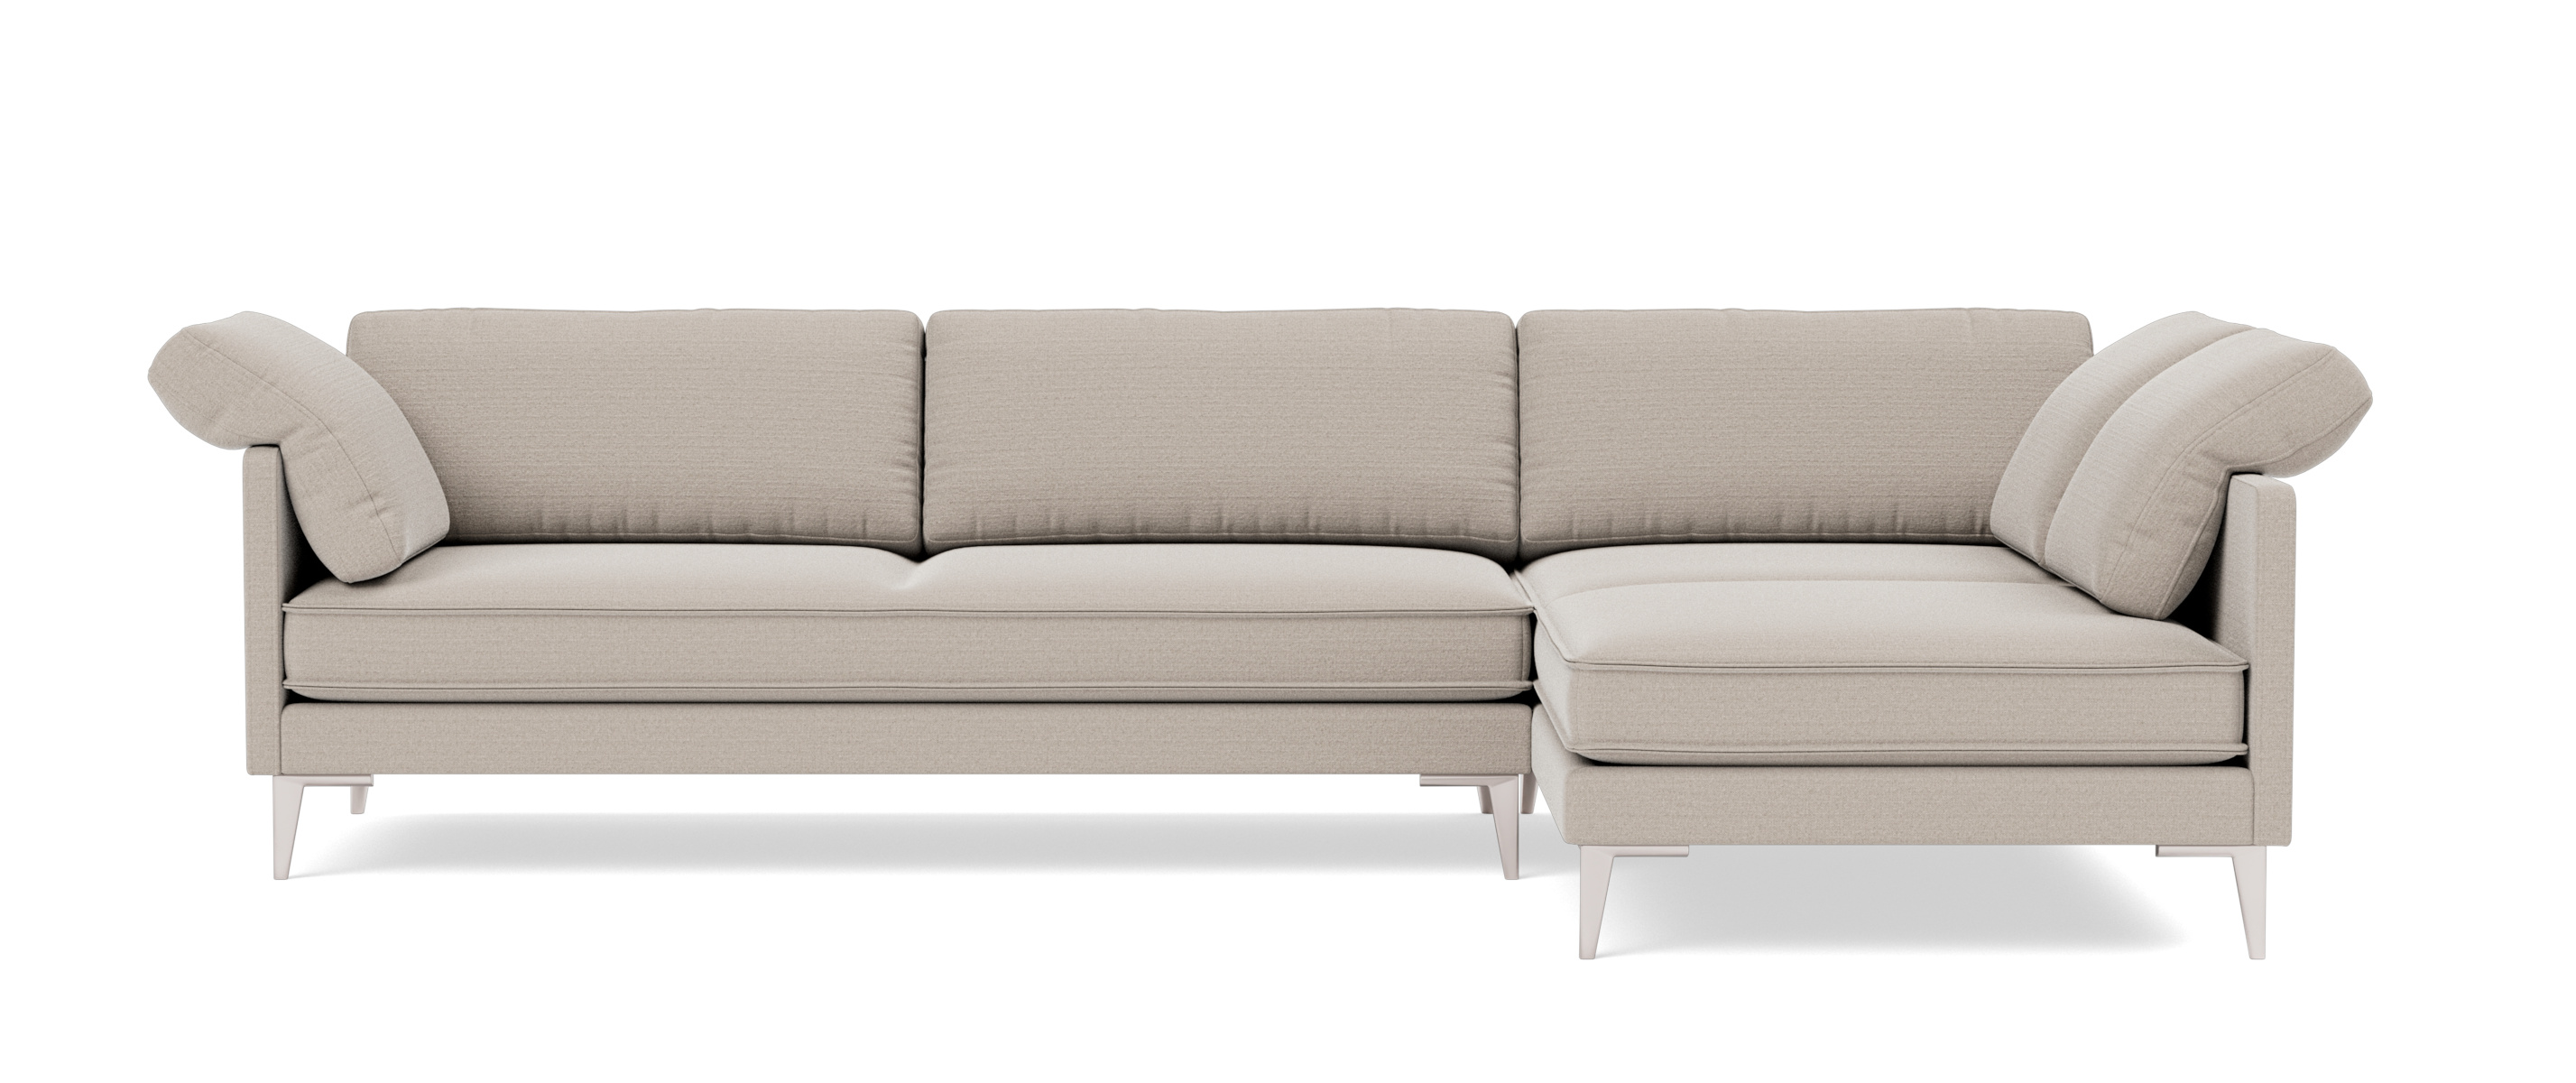 EJ295 Chaise Sofa, rechts, chrom / erik, 3790 Linen